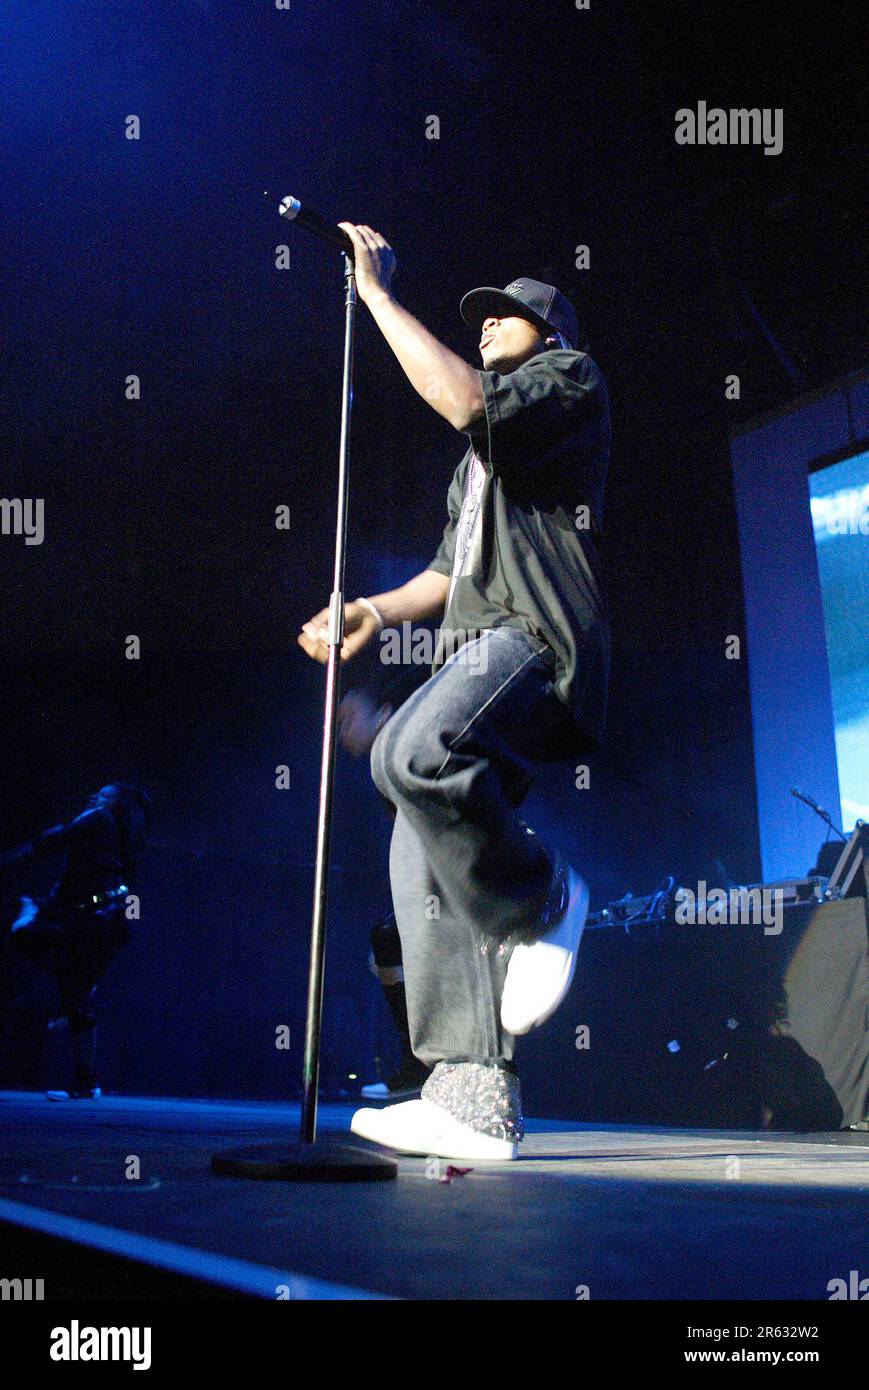 Ne-Yo, US rap artist, support act to Jay-Z And Rihanna At the 'Roc Tha Block' Concert Sydney Entertainment Centre, Sydney Australia, 25 October 2006 Stock Photo